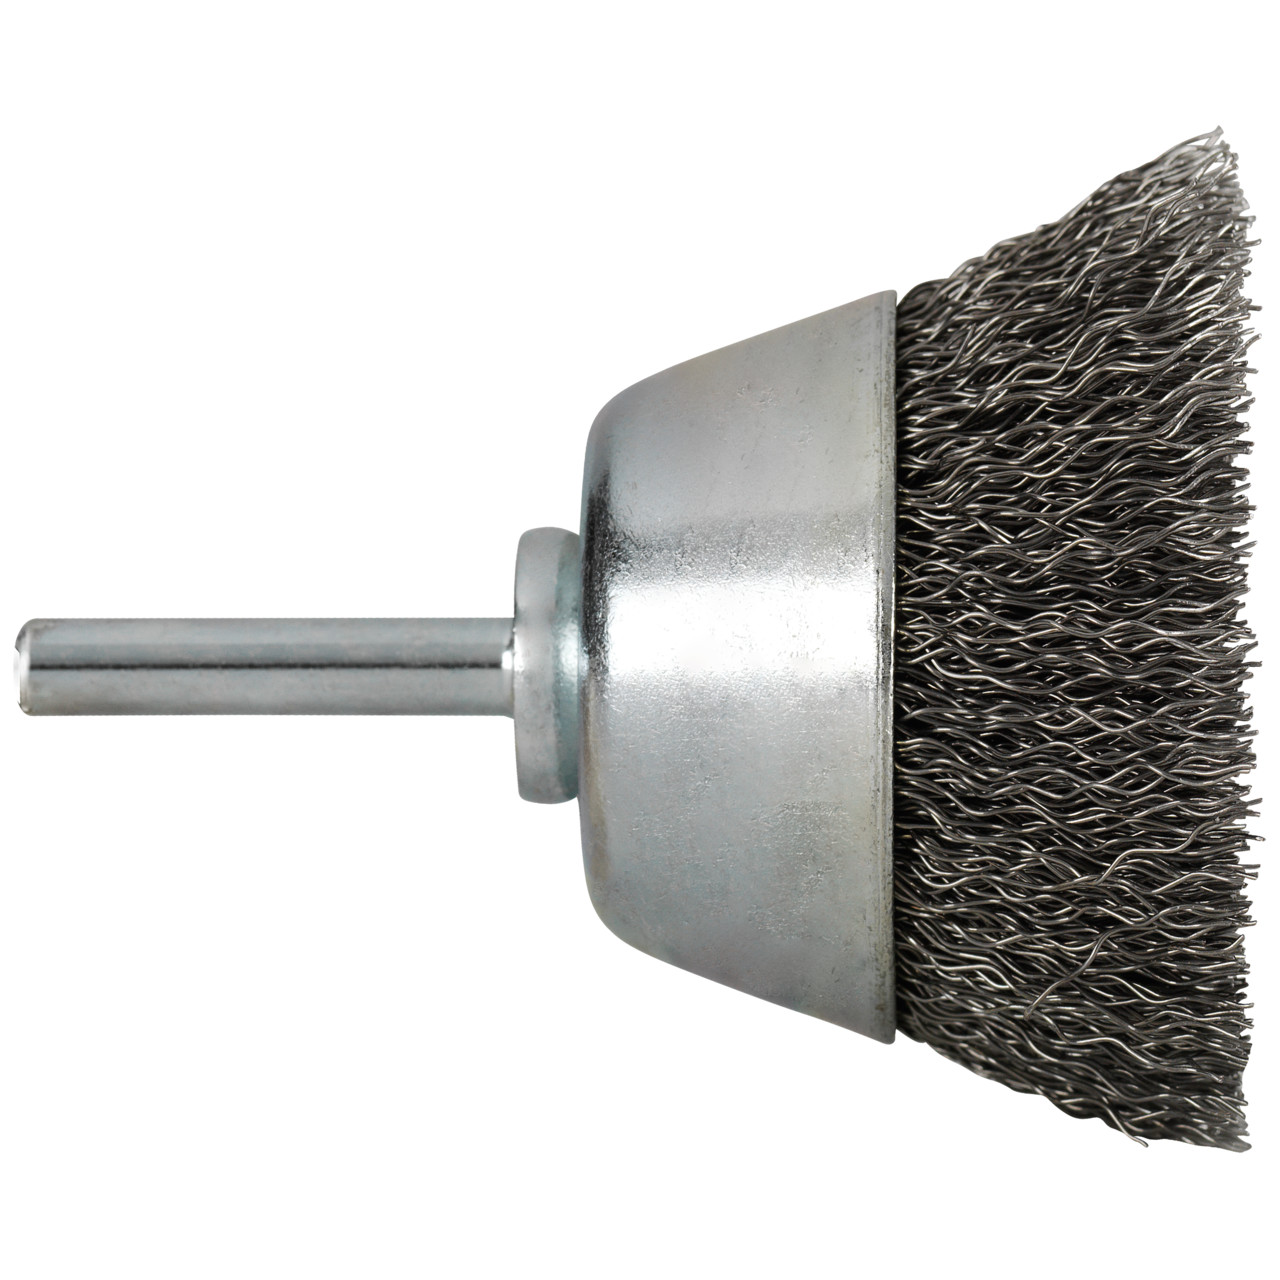 Tyrolit Spazzole a tazza DxLxH-GExI 70x15x25-6x30 Per acciaio, forma: 52TDW - (spazzole a tazza), Art. 34276010